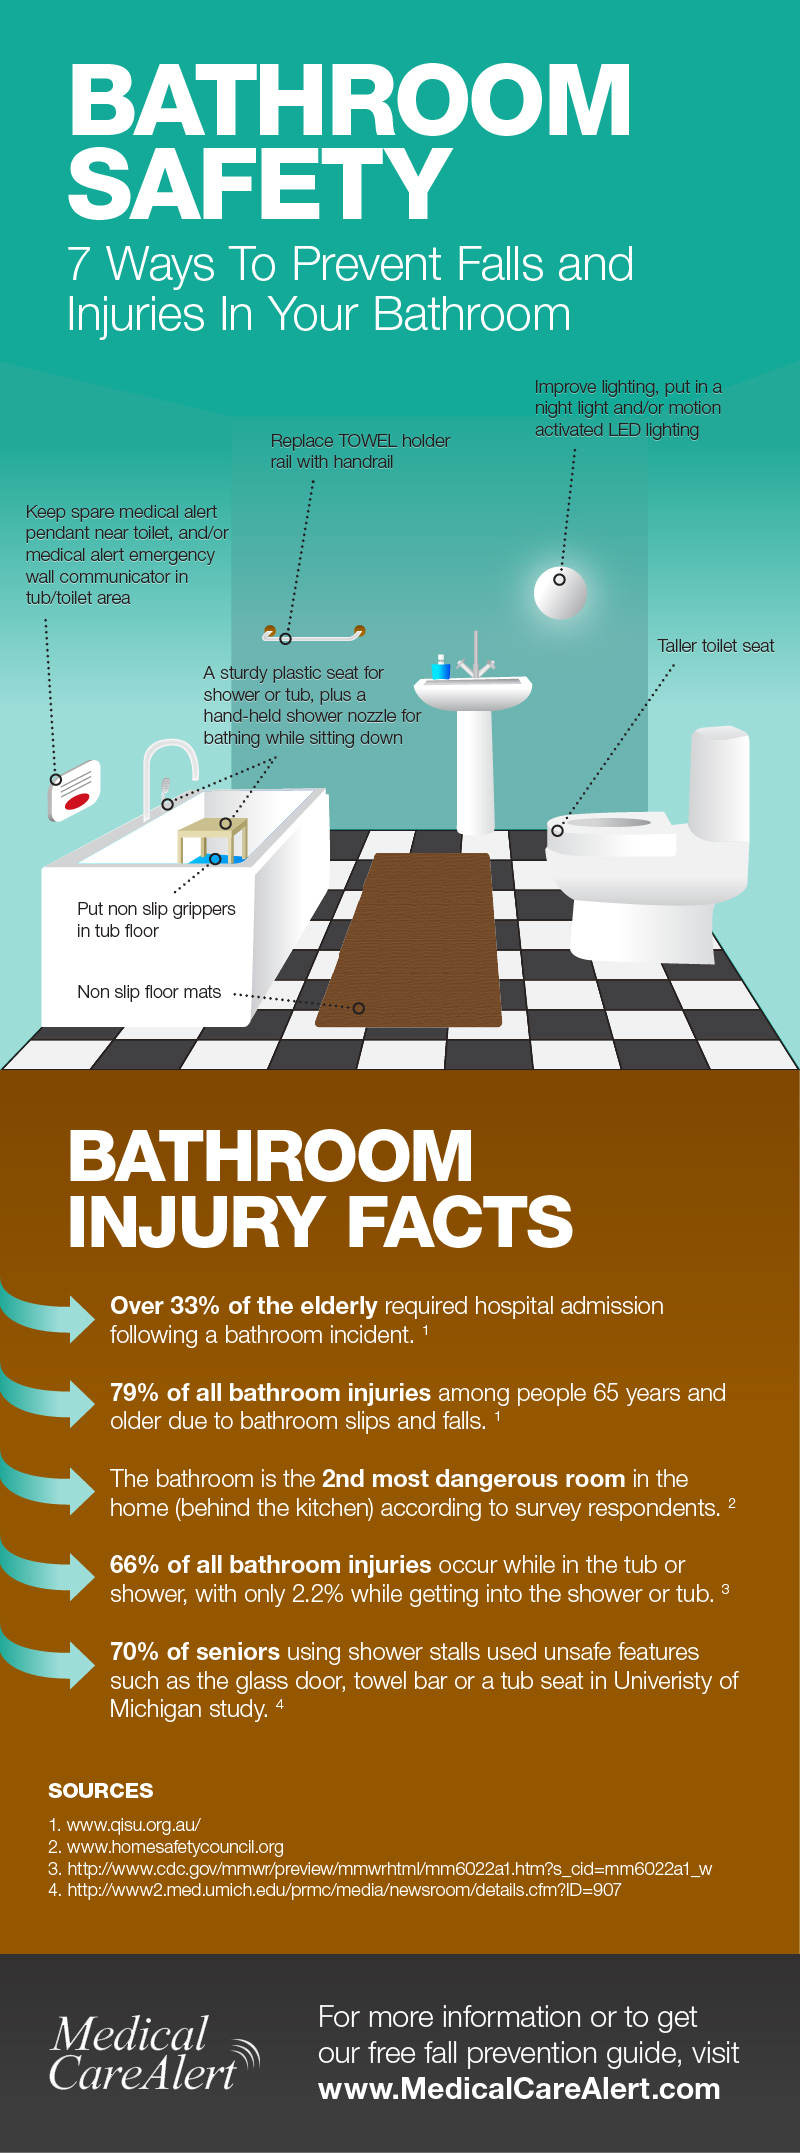 bathroom safety for seniors infographic